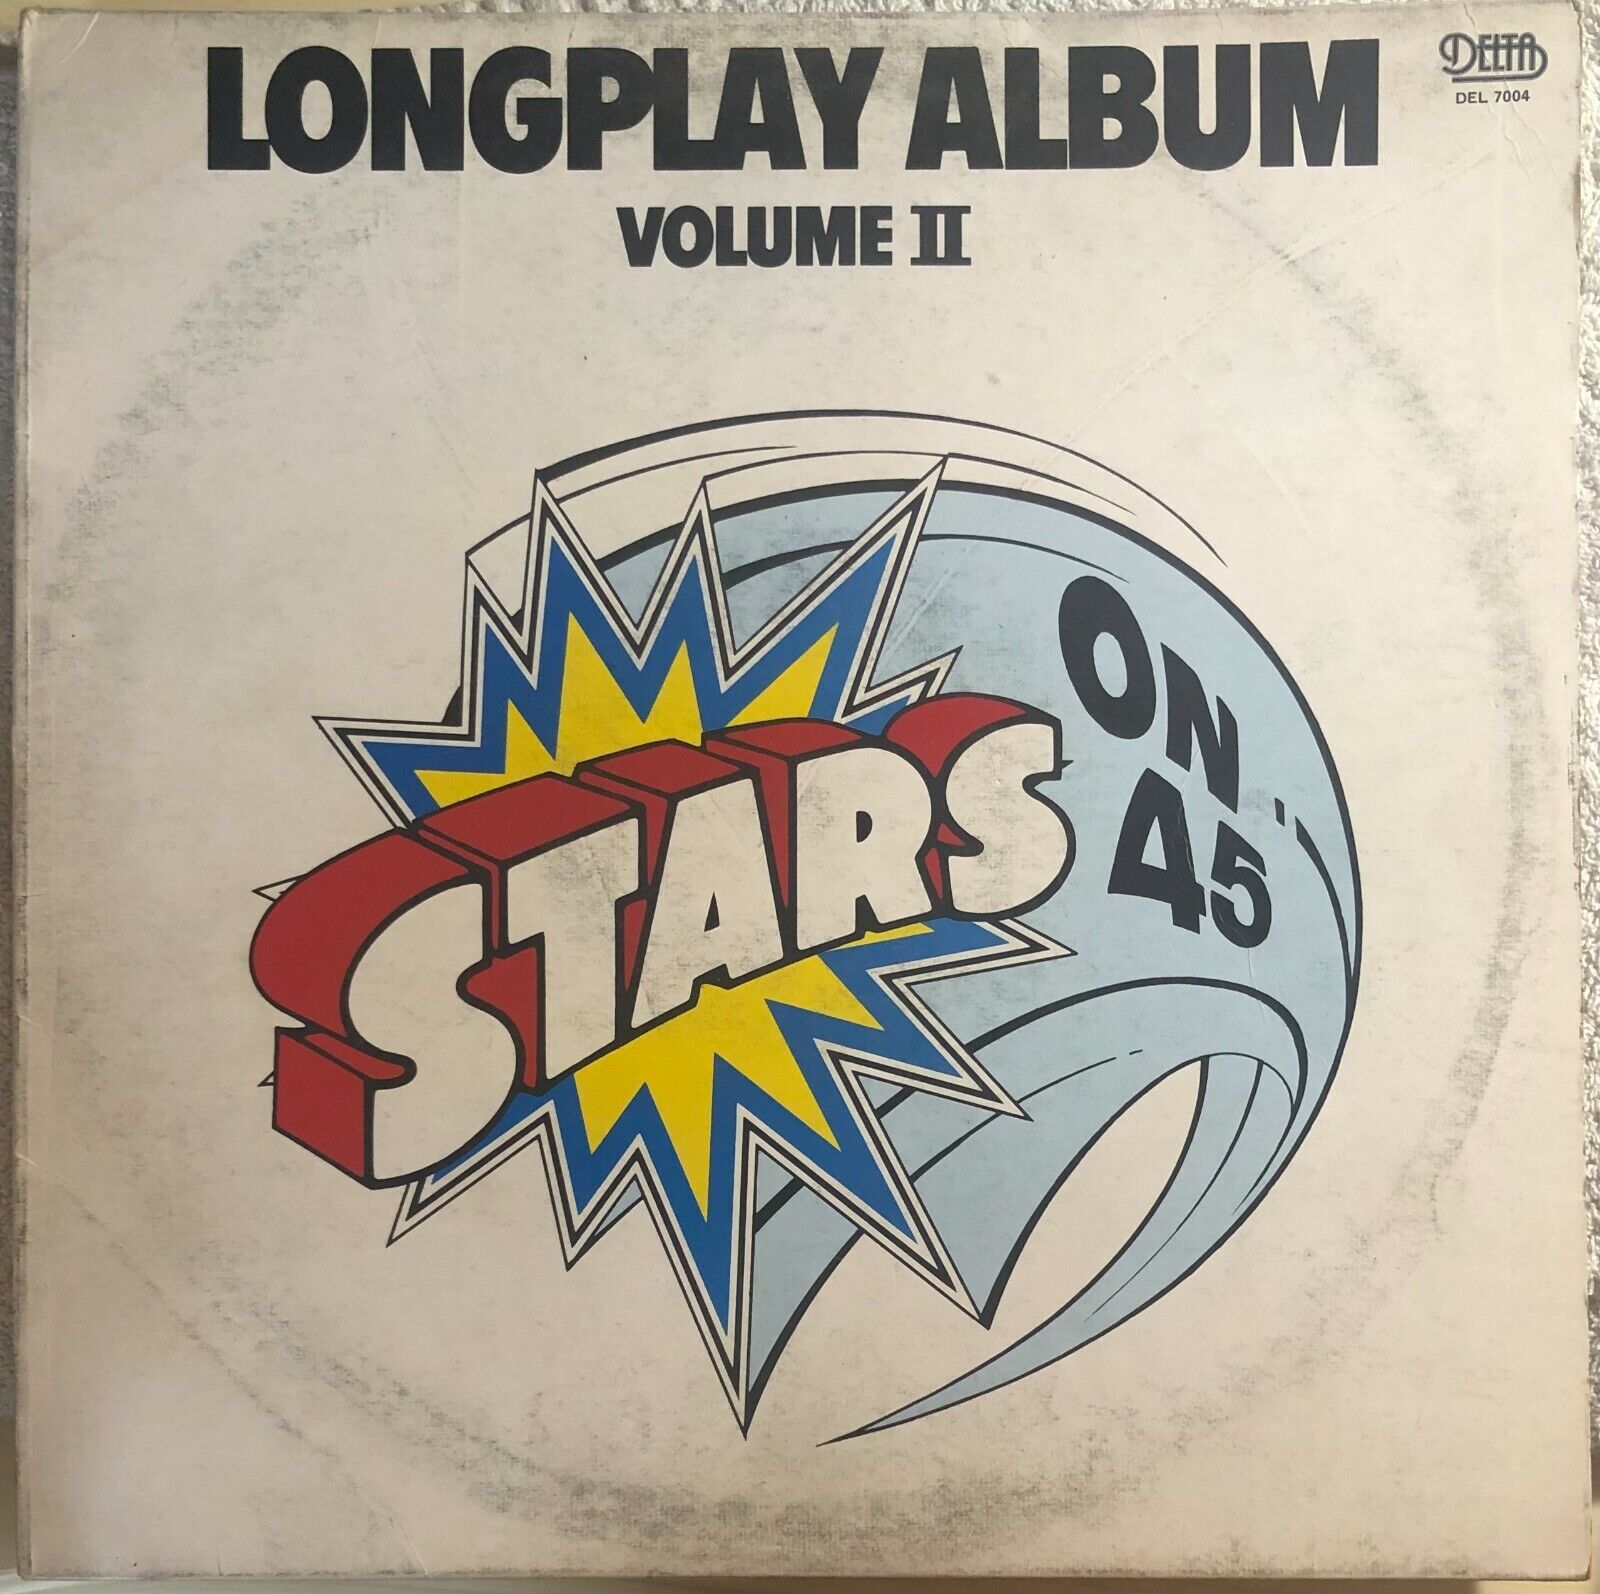 Stars On 45 Longplay Album (Volume II) VINILE di Aa.vv.,  1981,  Wea Italiana S.